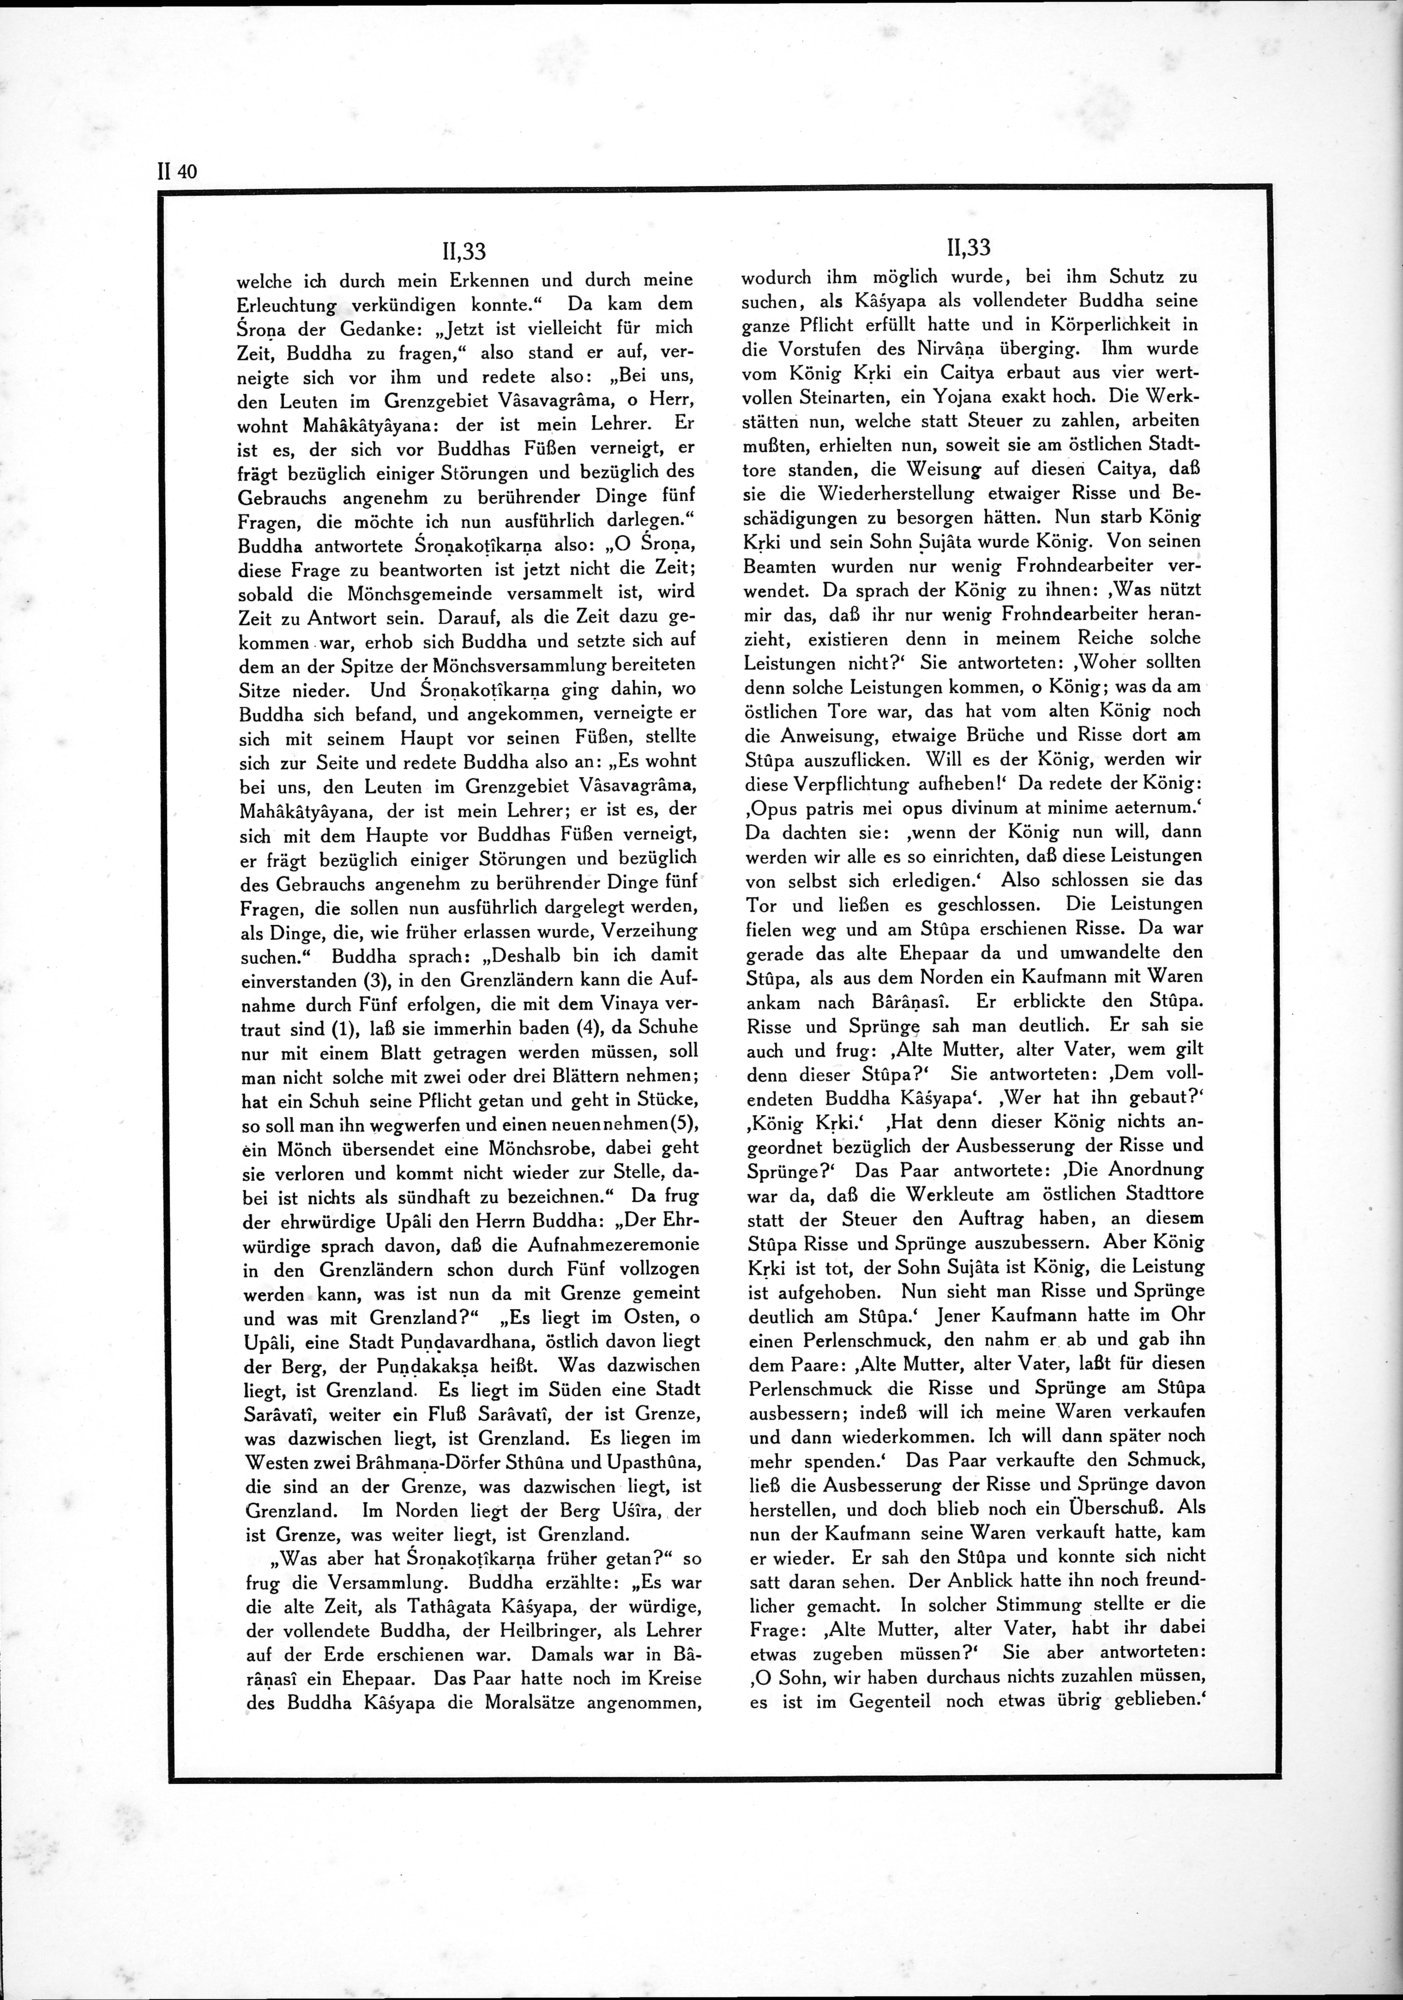 Alt-Kutscha : vol.1 / Page 146 (Grayscale High Resolution Image)